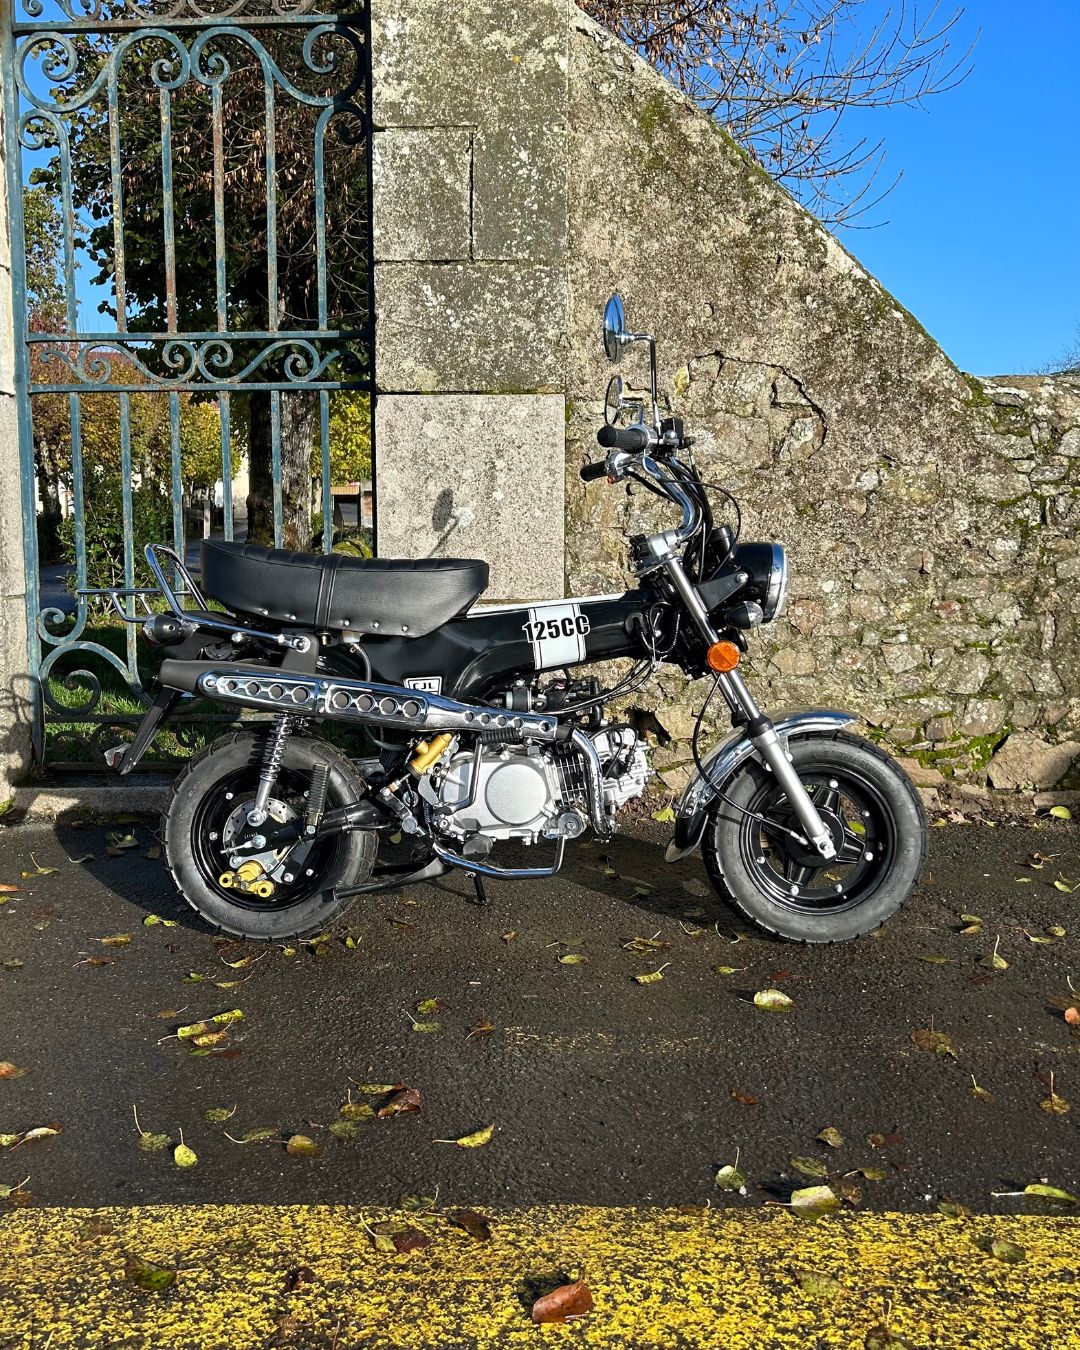 DAX 125cc